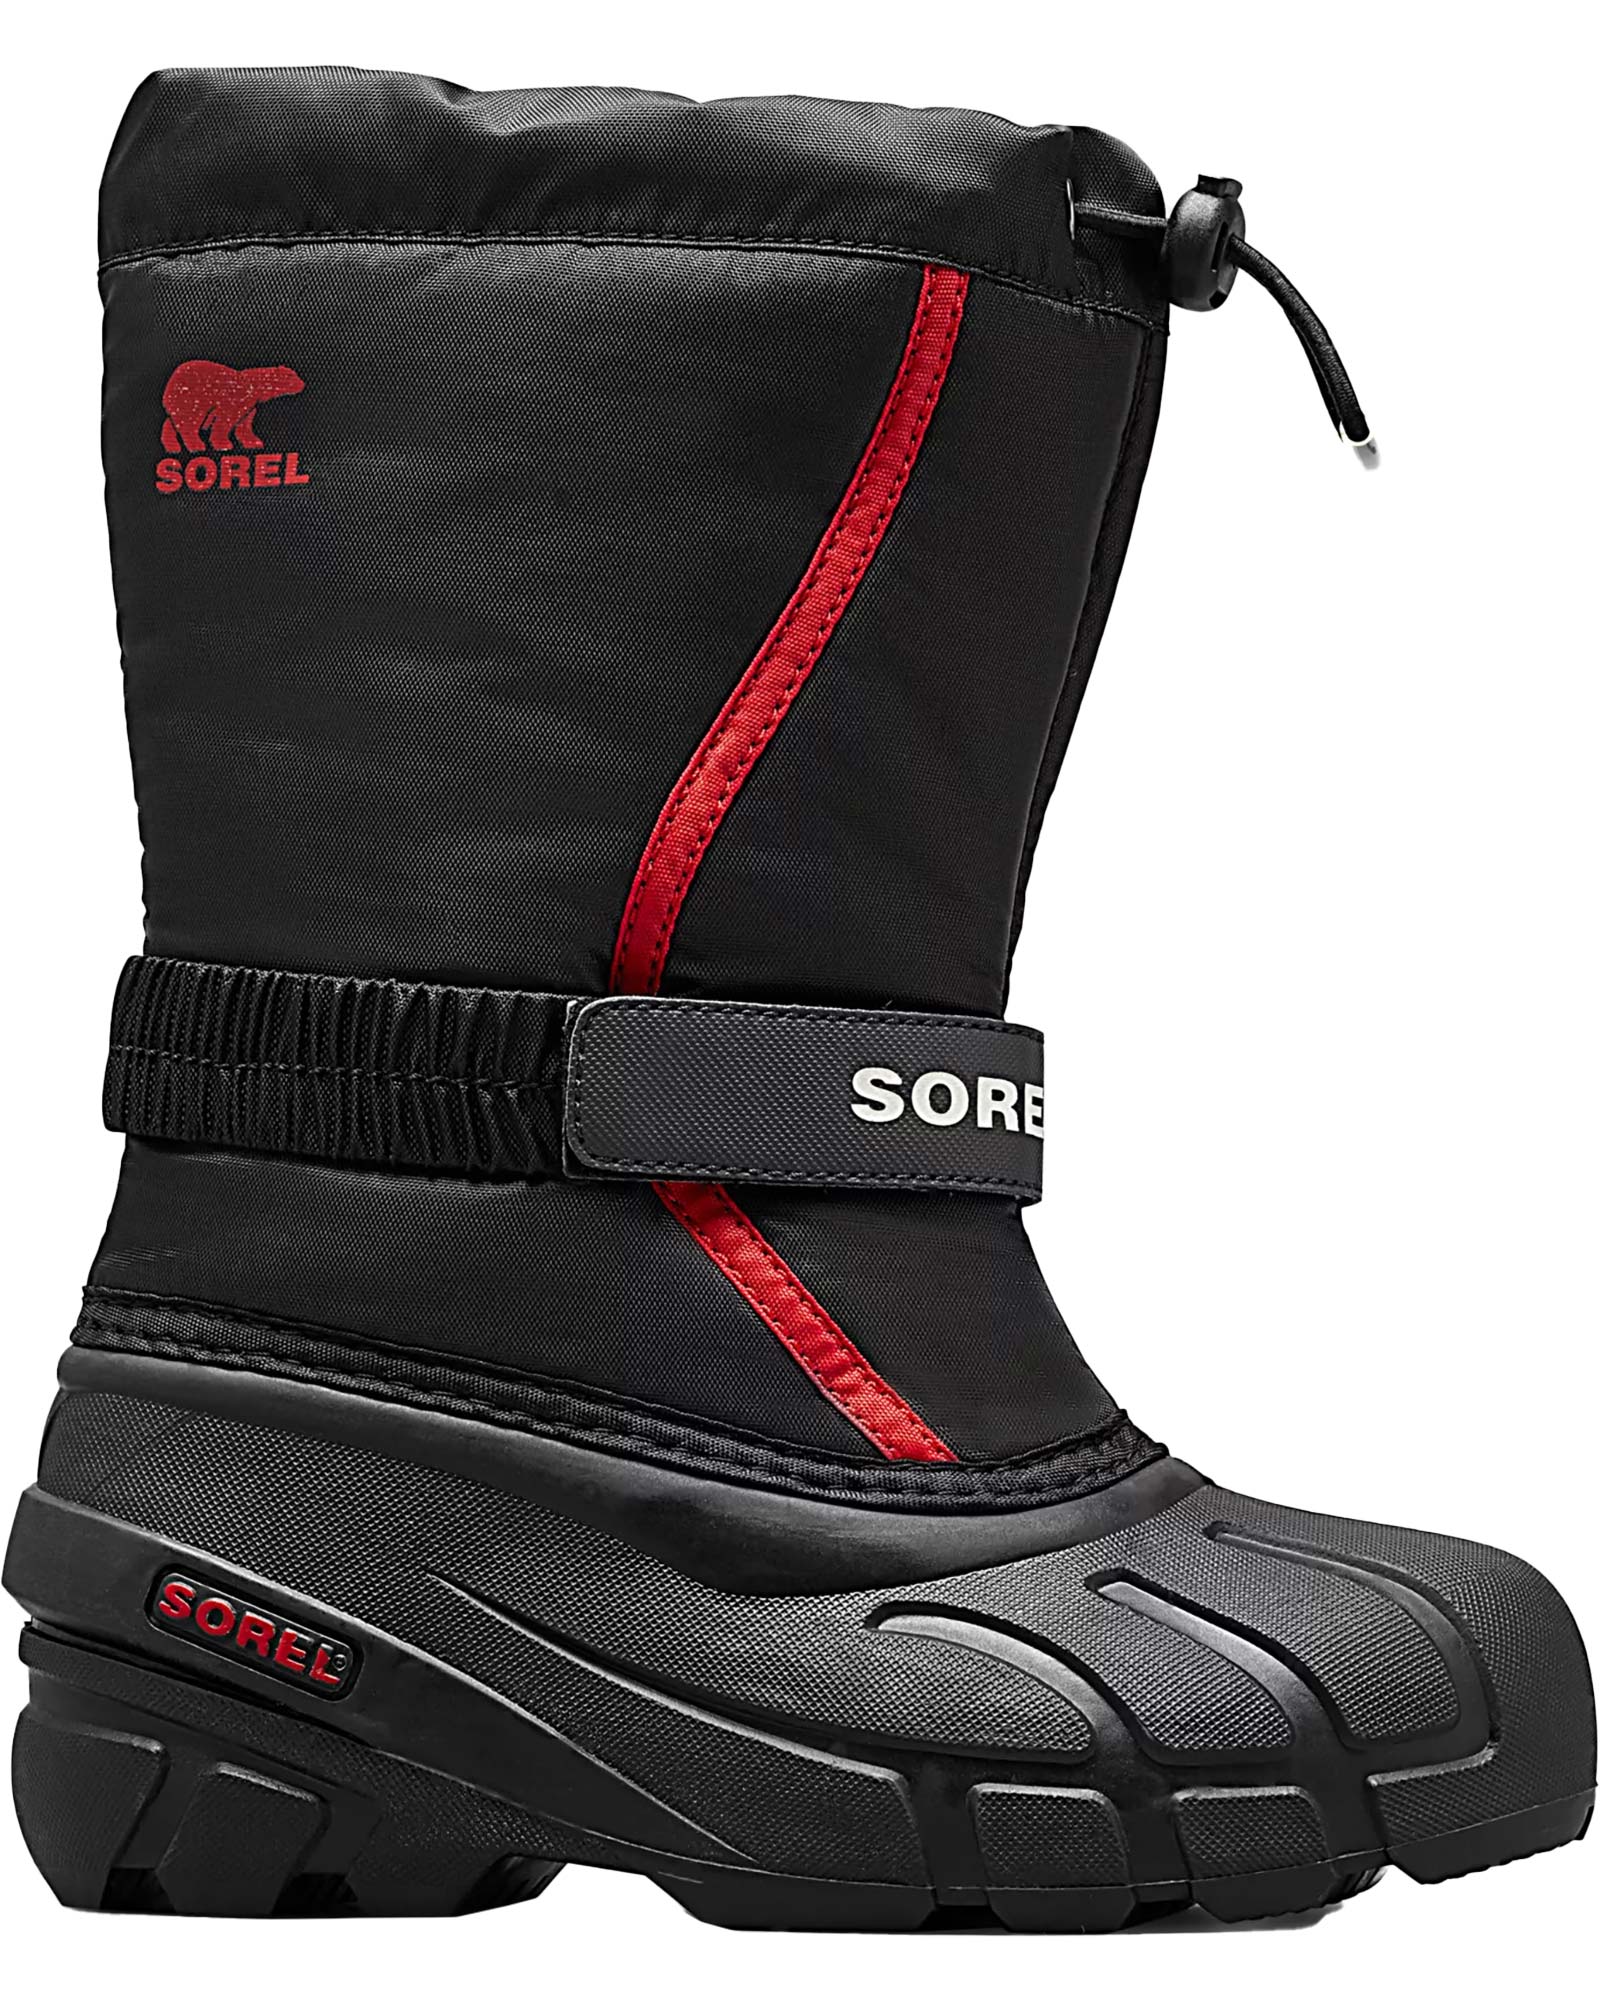 Sorel Flurry Kids’ Snow Boots - Black/Bright Red UK 5